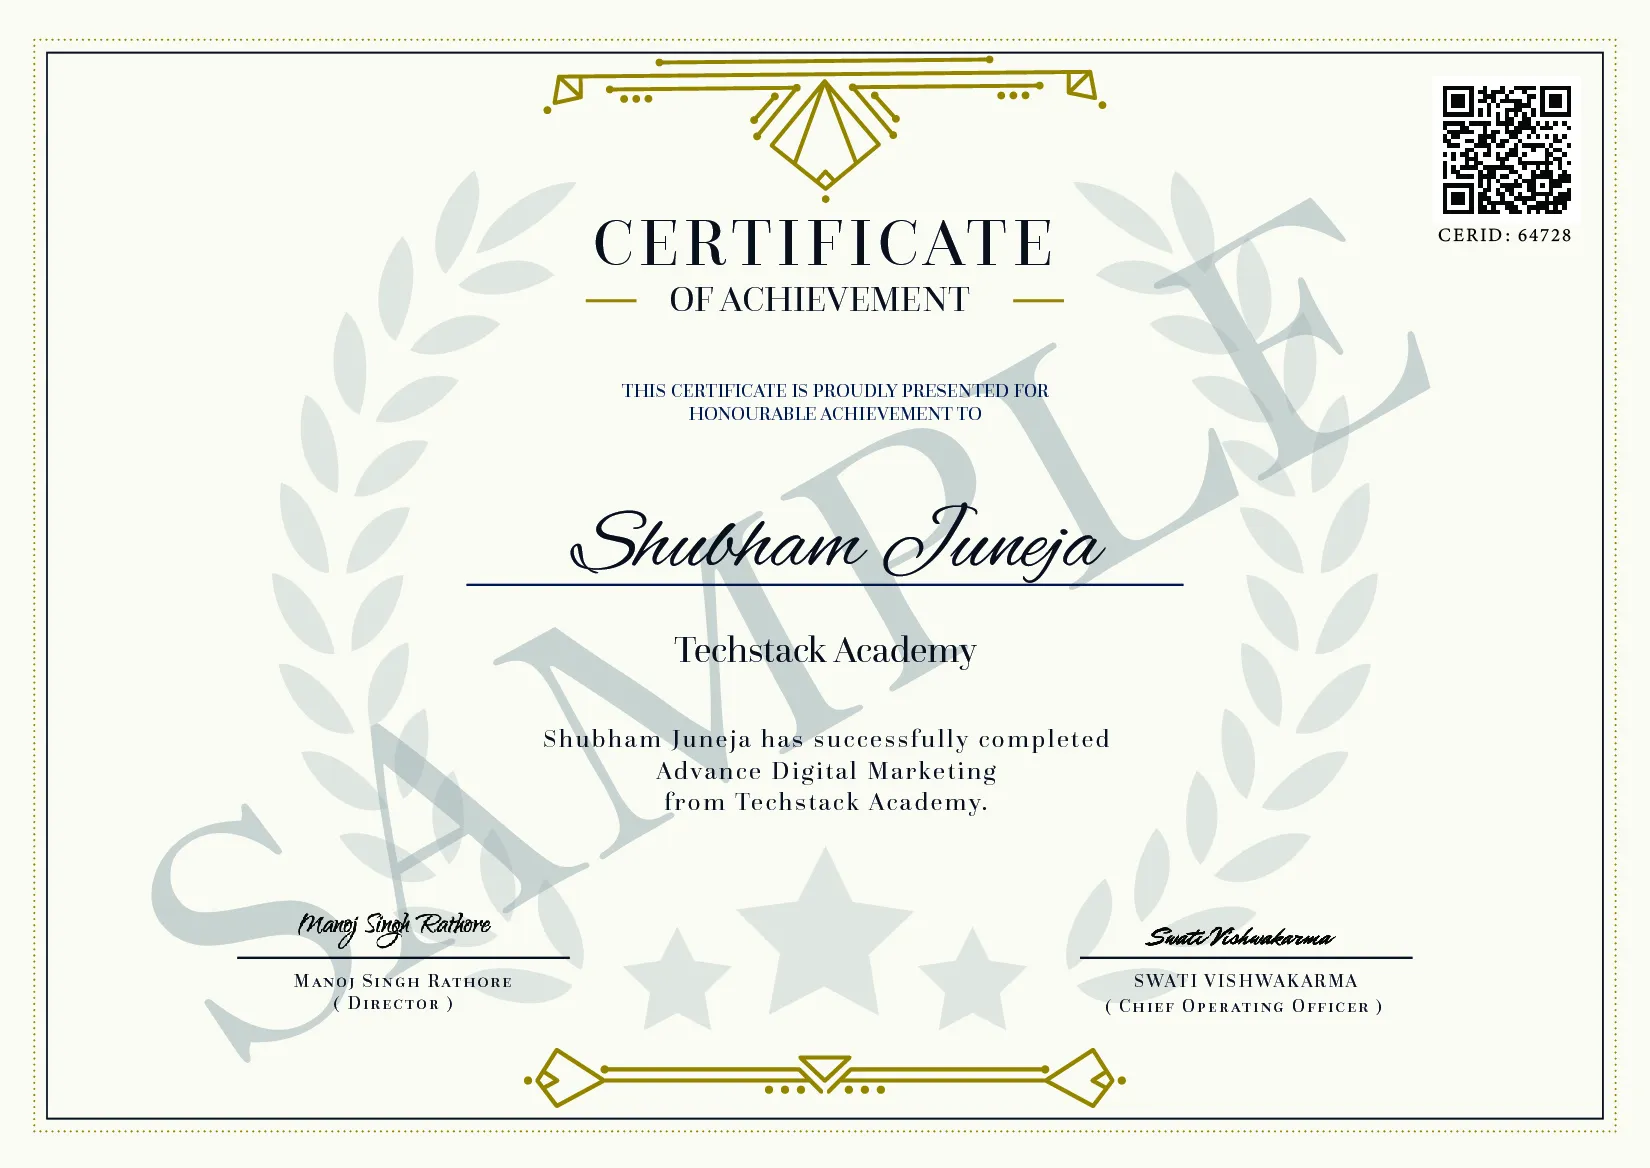 MBA in Digital Marketing Course Certificate